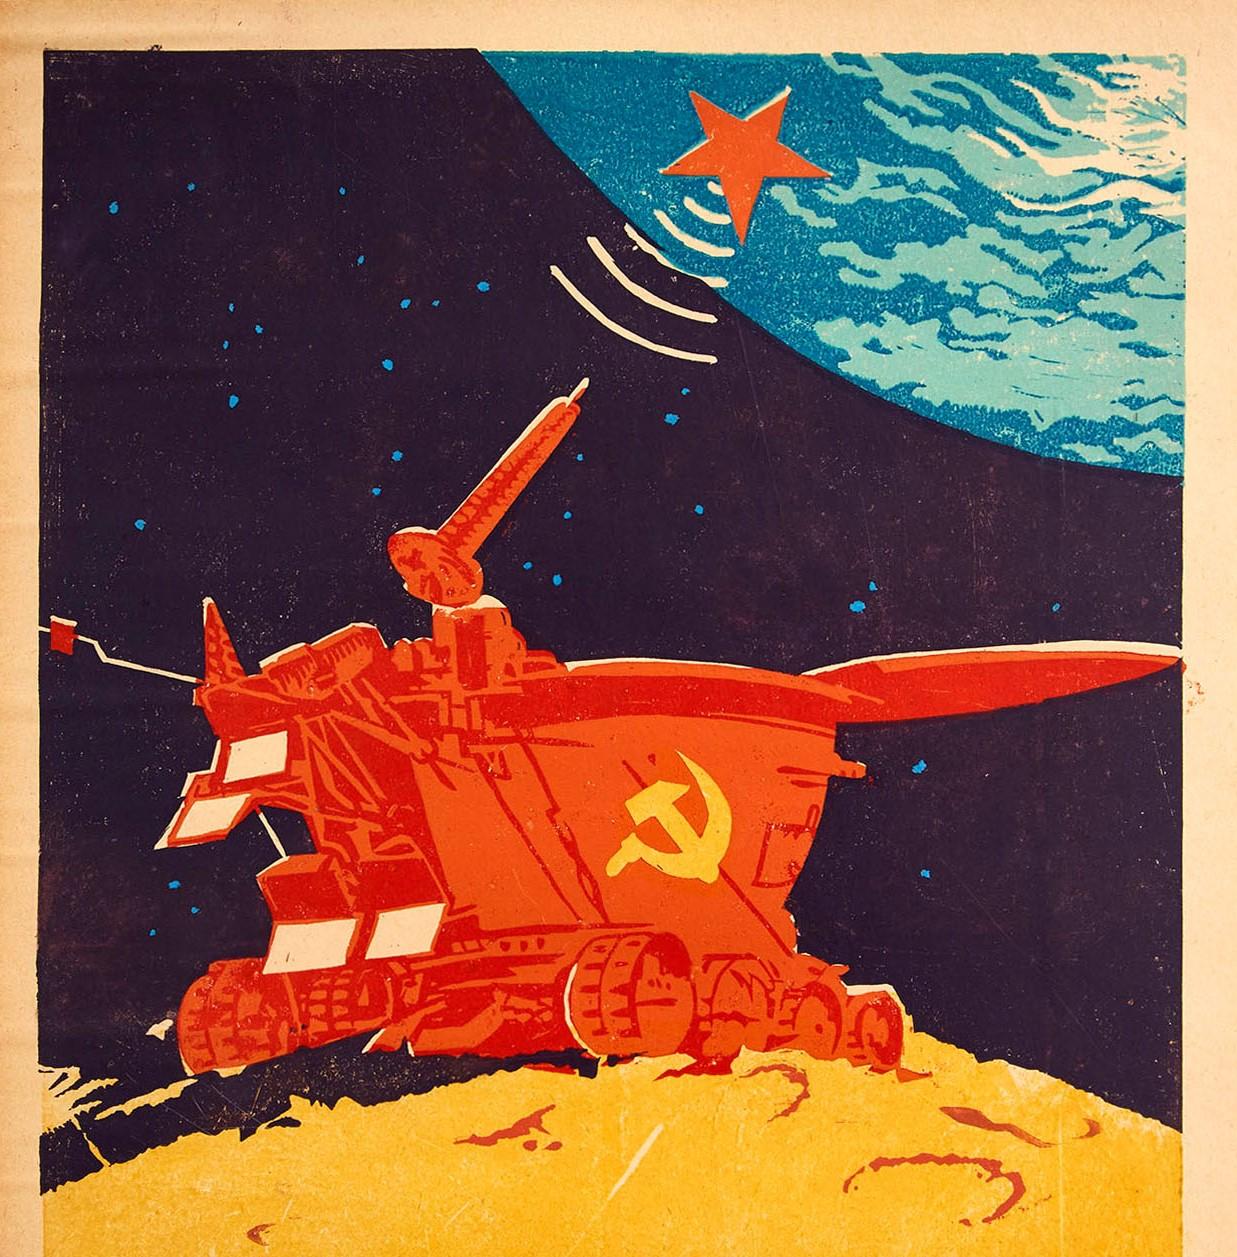 Original Vintage Poster Lunokhod Moonwalker Cold War Space Race Peace & Progress - Print by Unknown